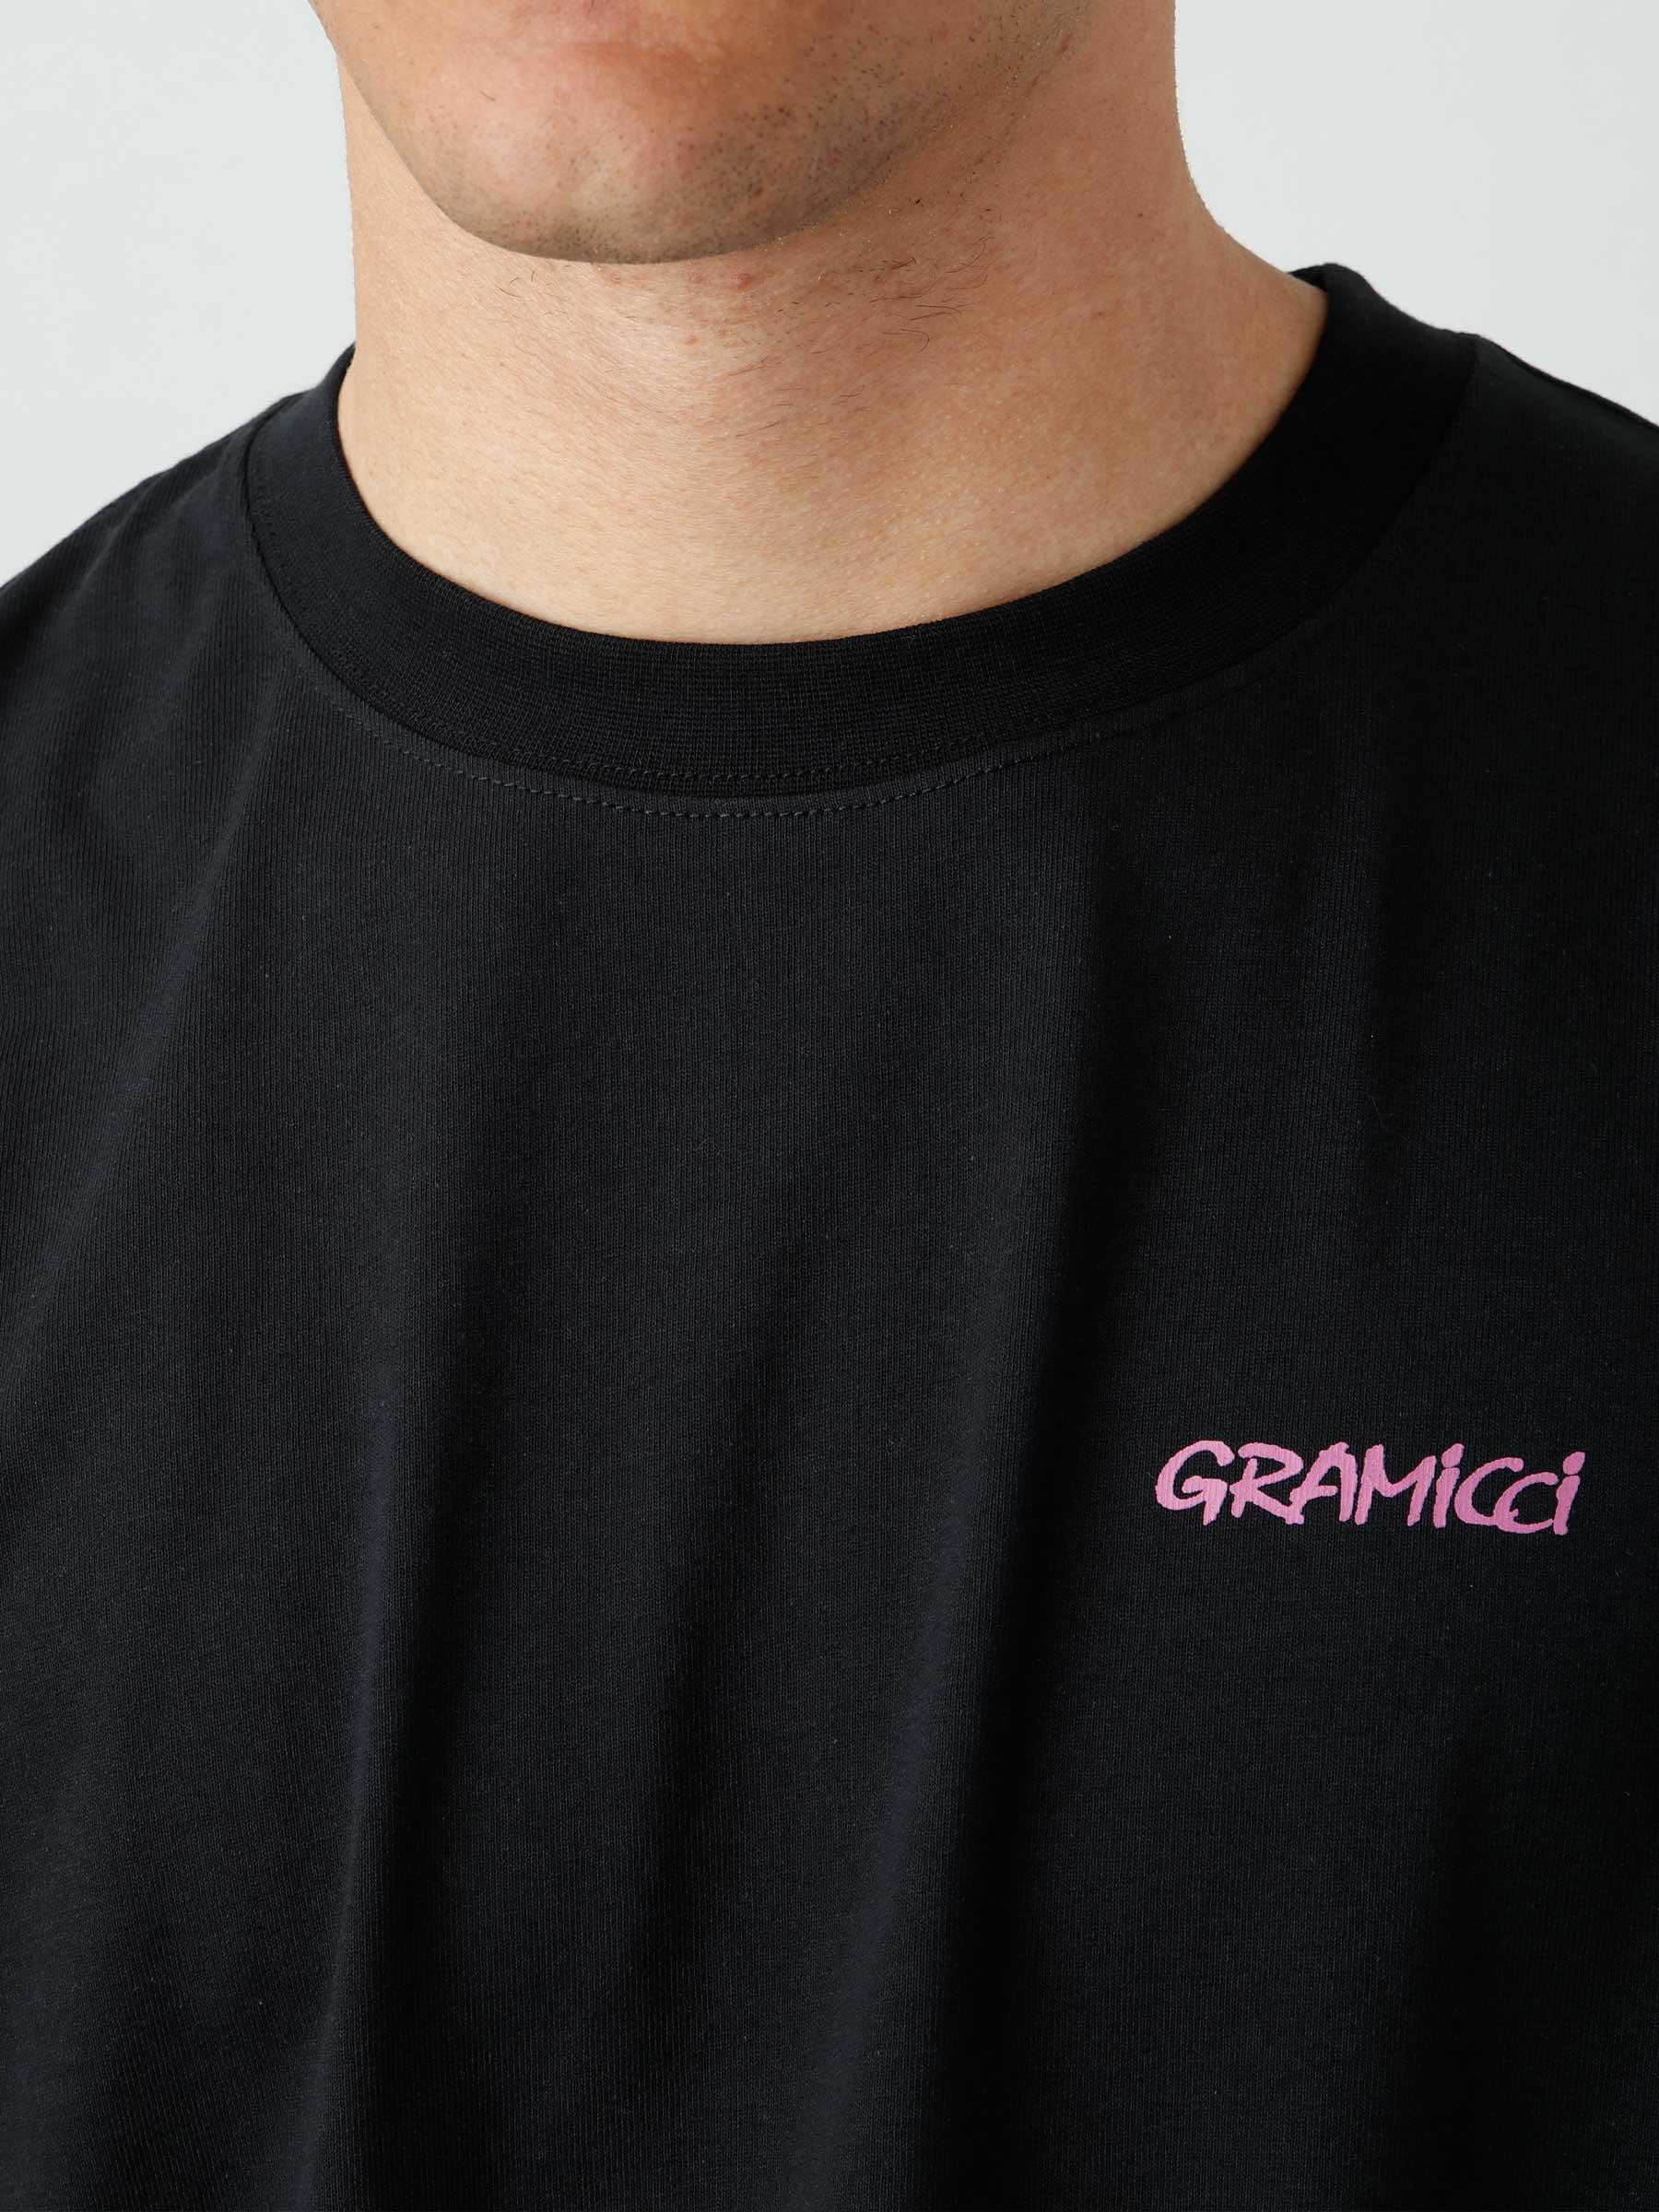 G-Logo T-shirt Black G2SU-T003